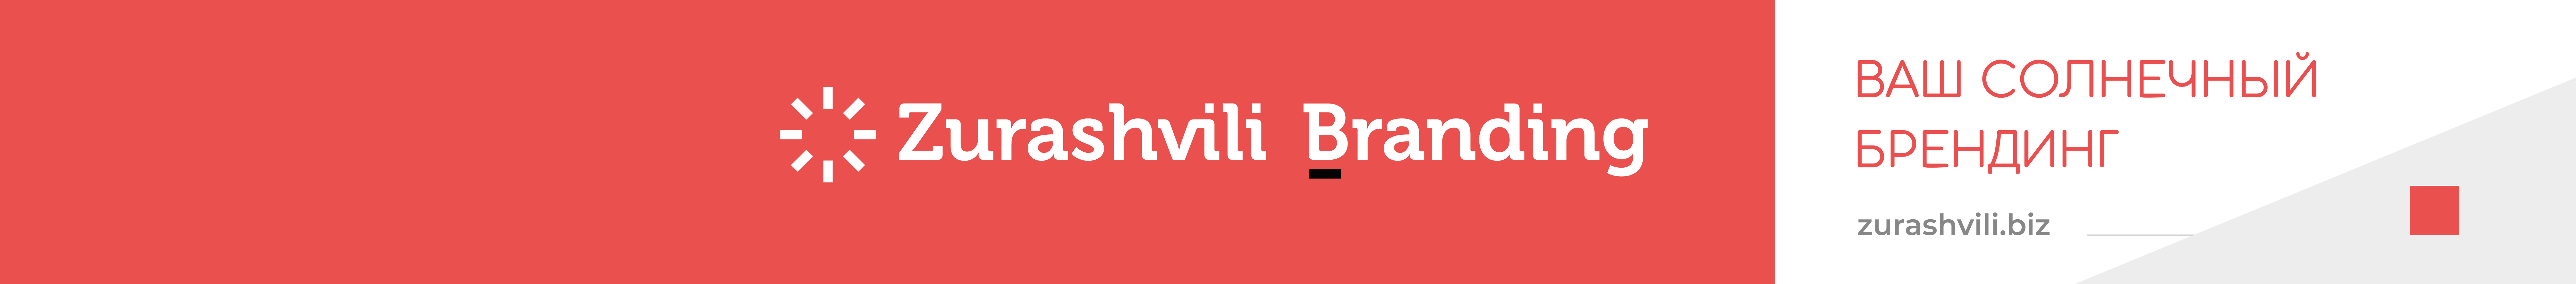 Zurashvili Branding's profile banner